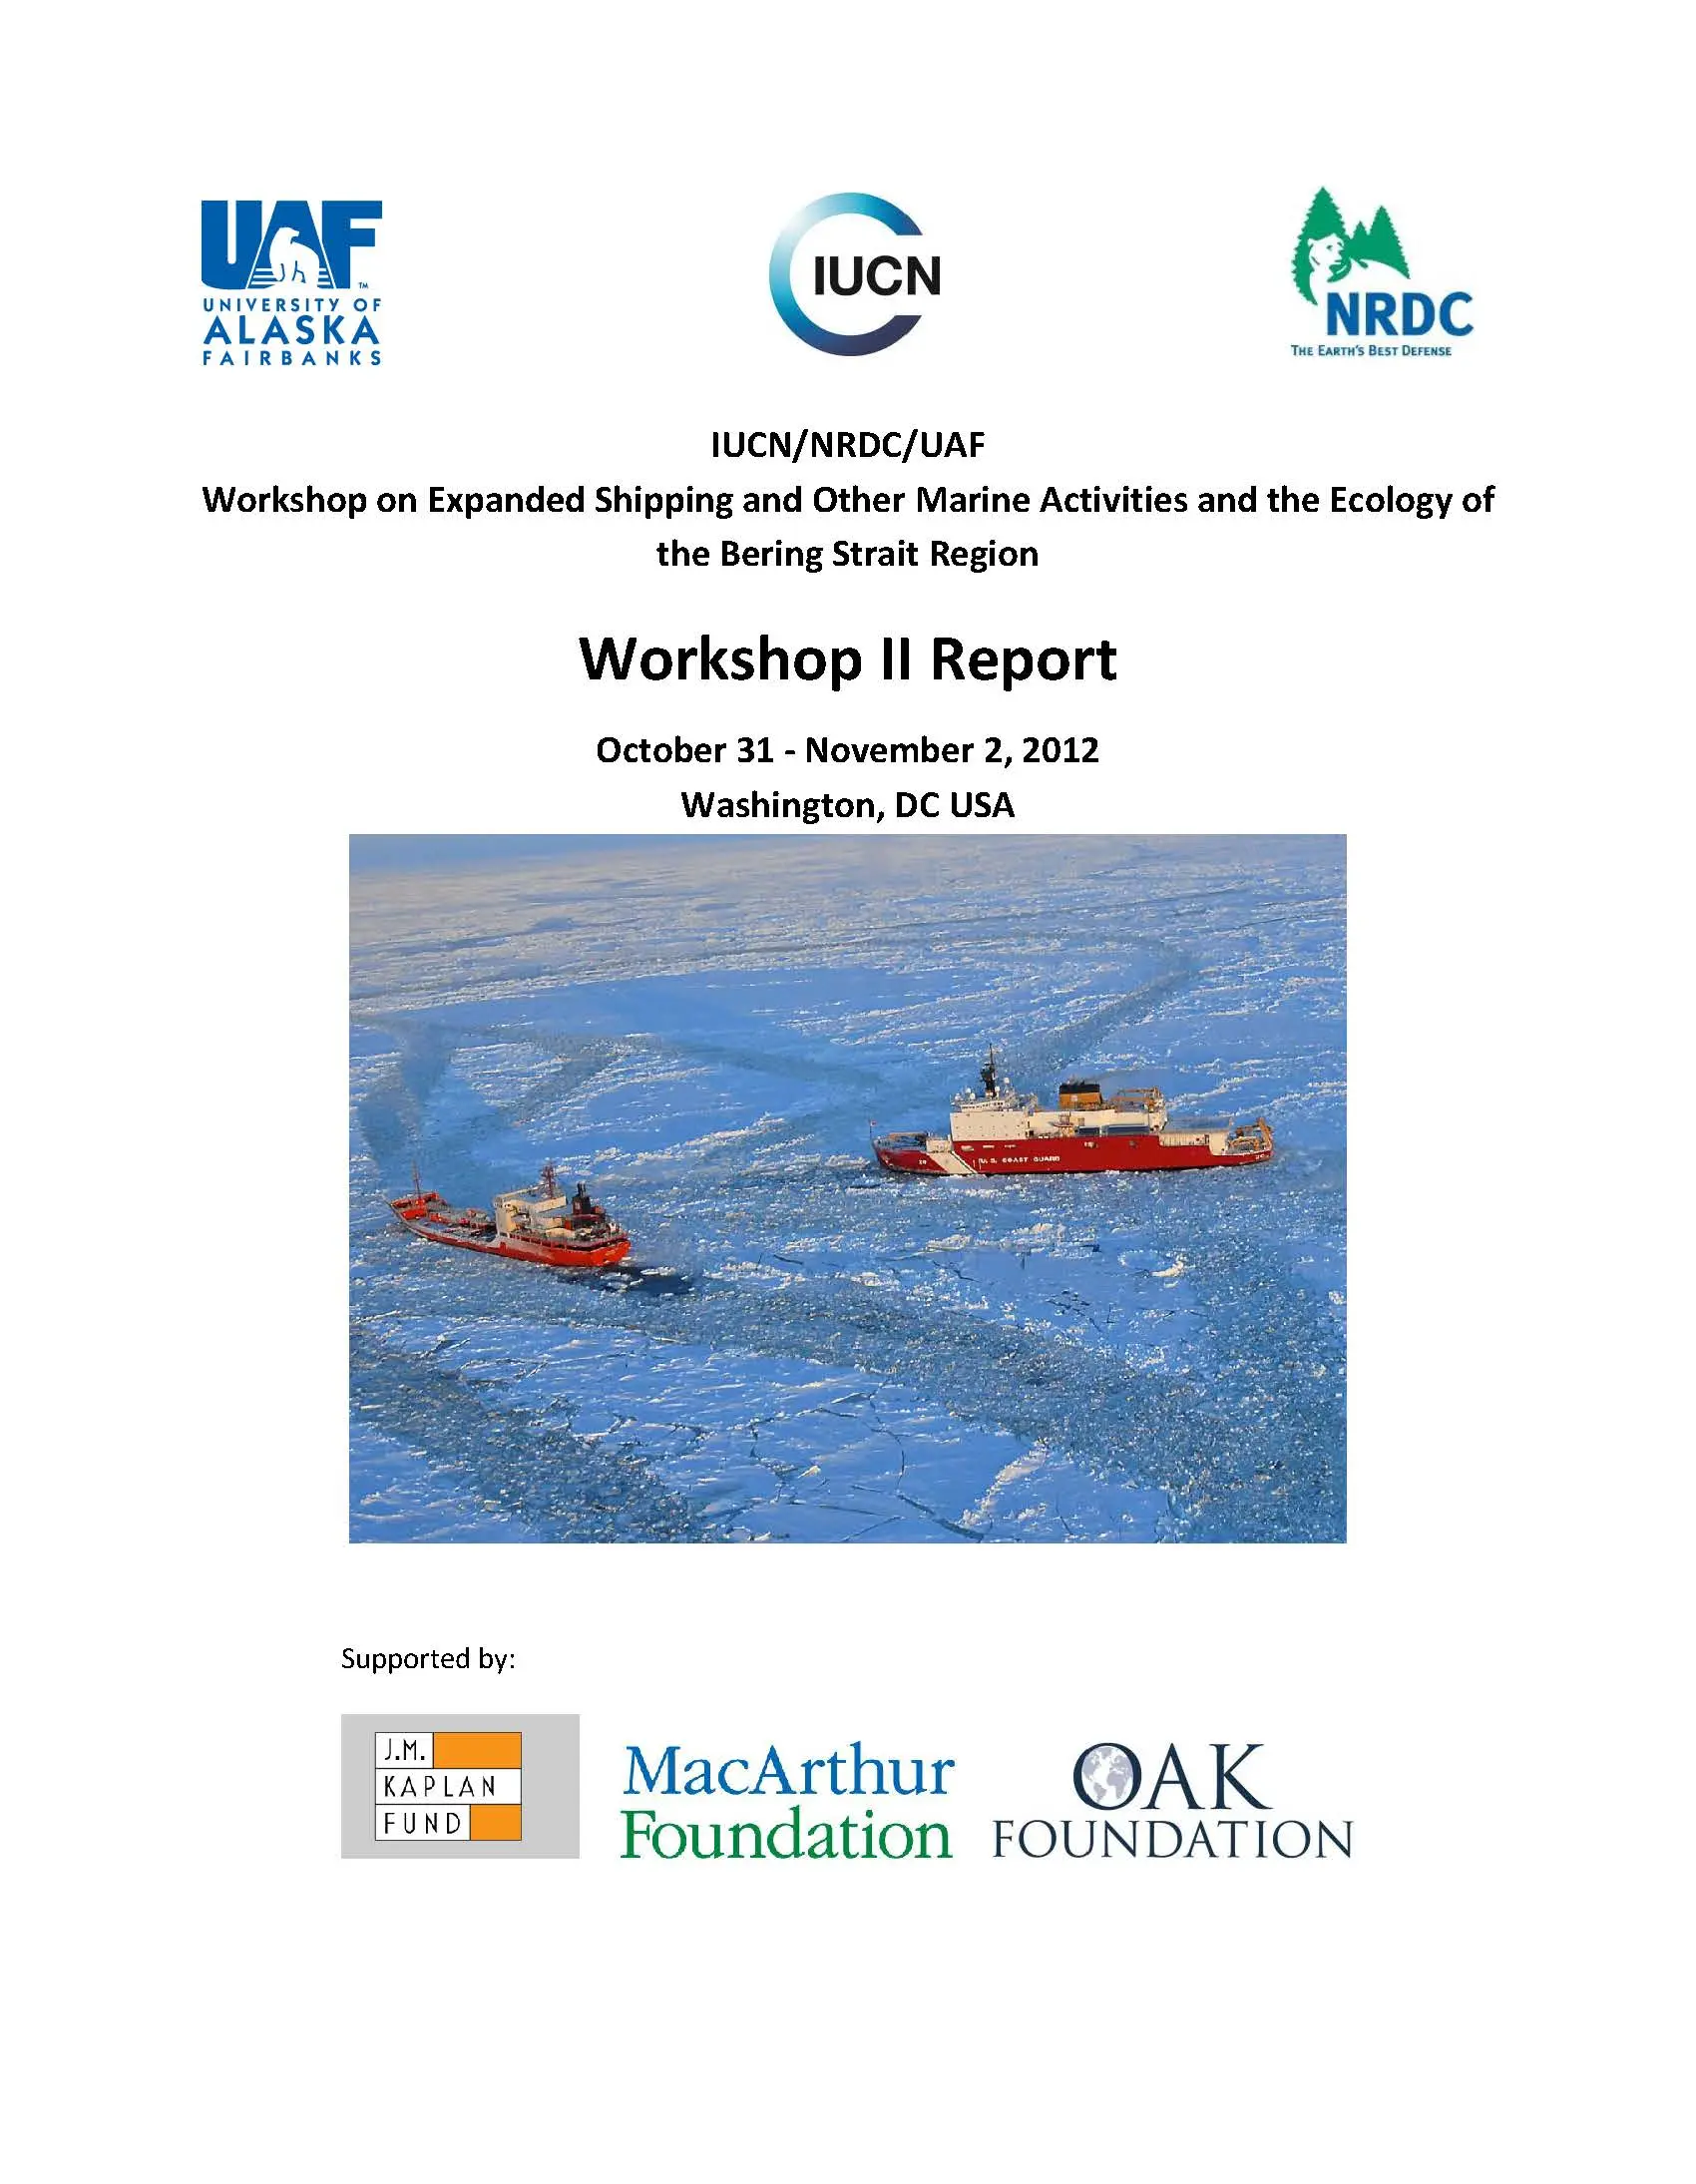 Bering Strait Region - Workshop II Report